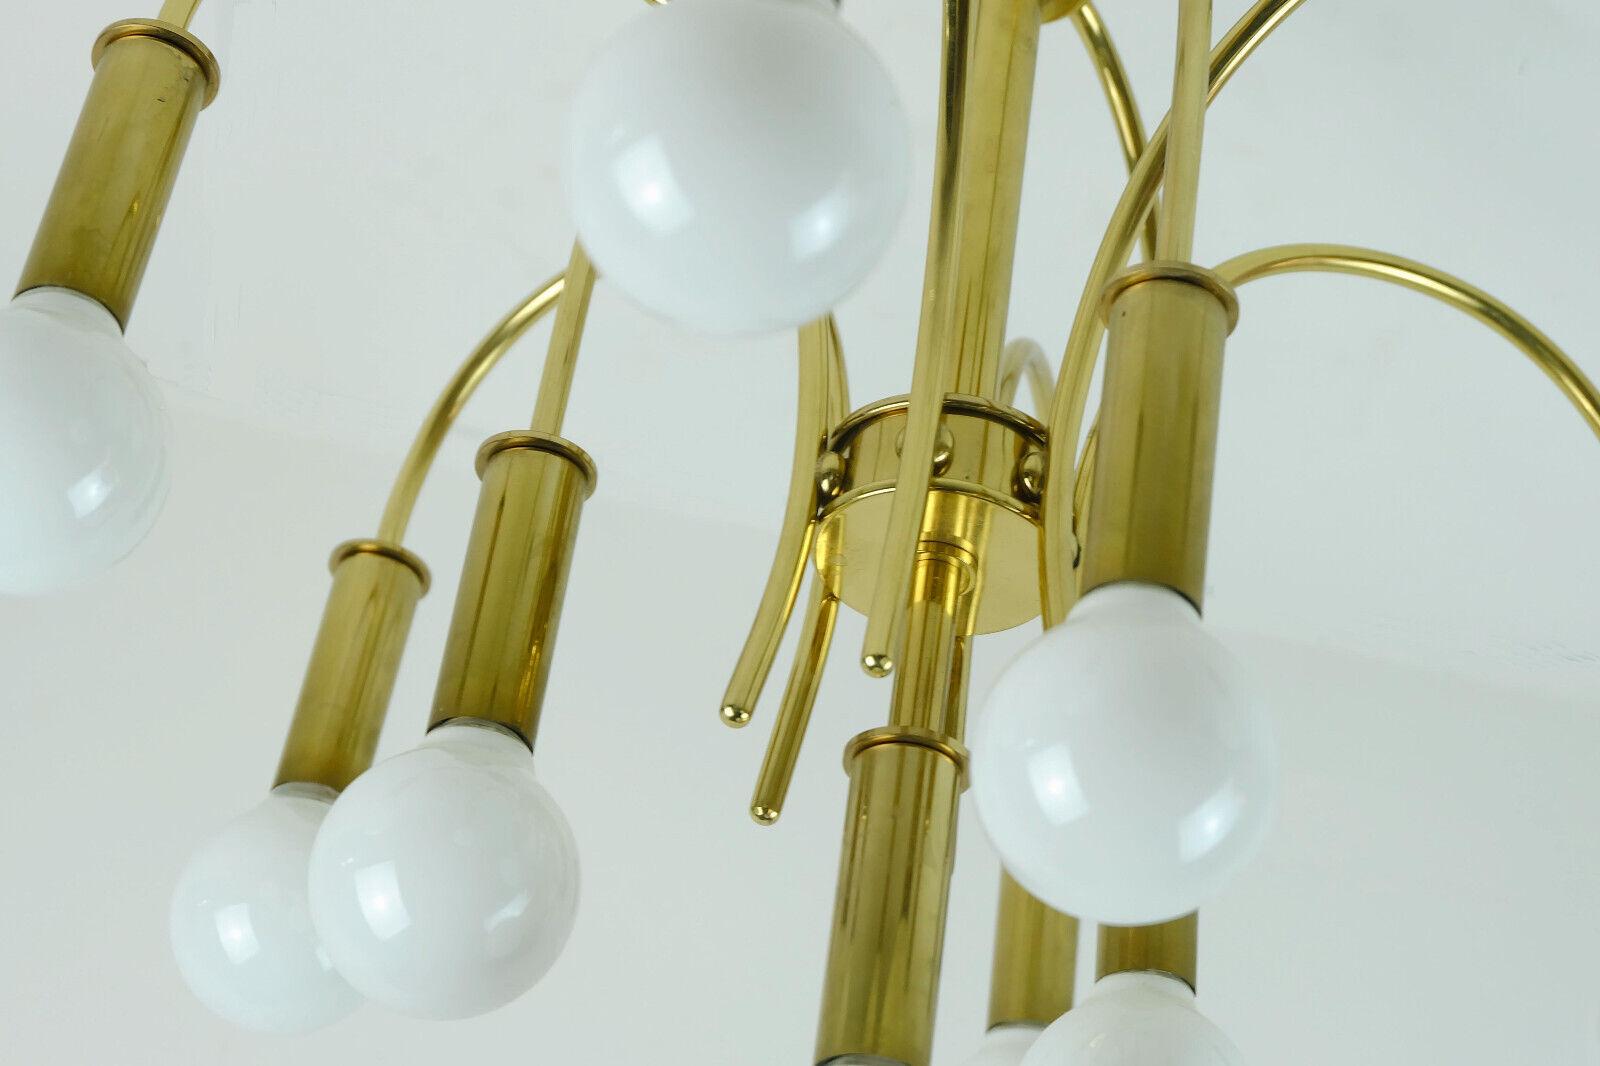 Brass 1970s sputnik brass CEILING LIGHT 10-light chandelier schroeder & co. For Sale